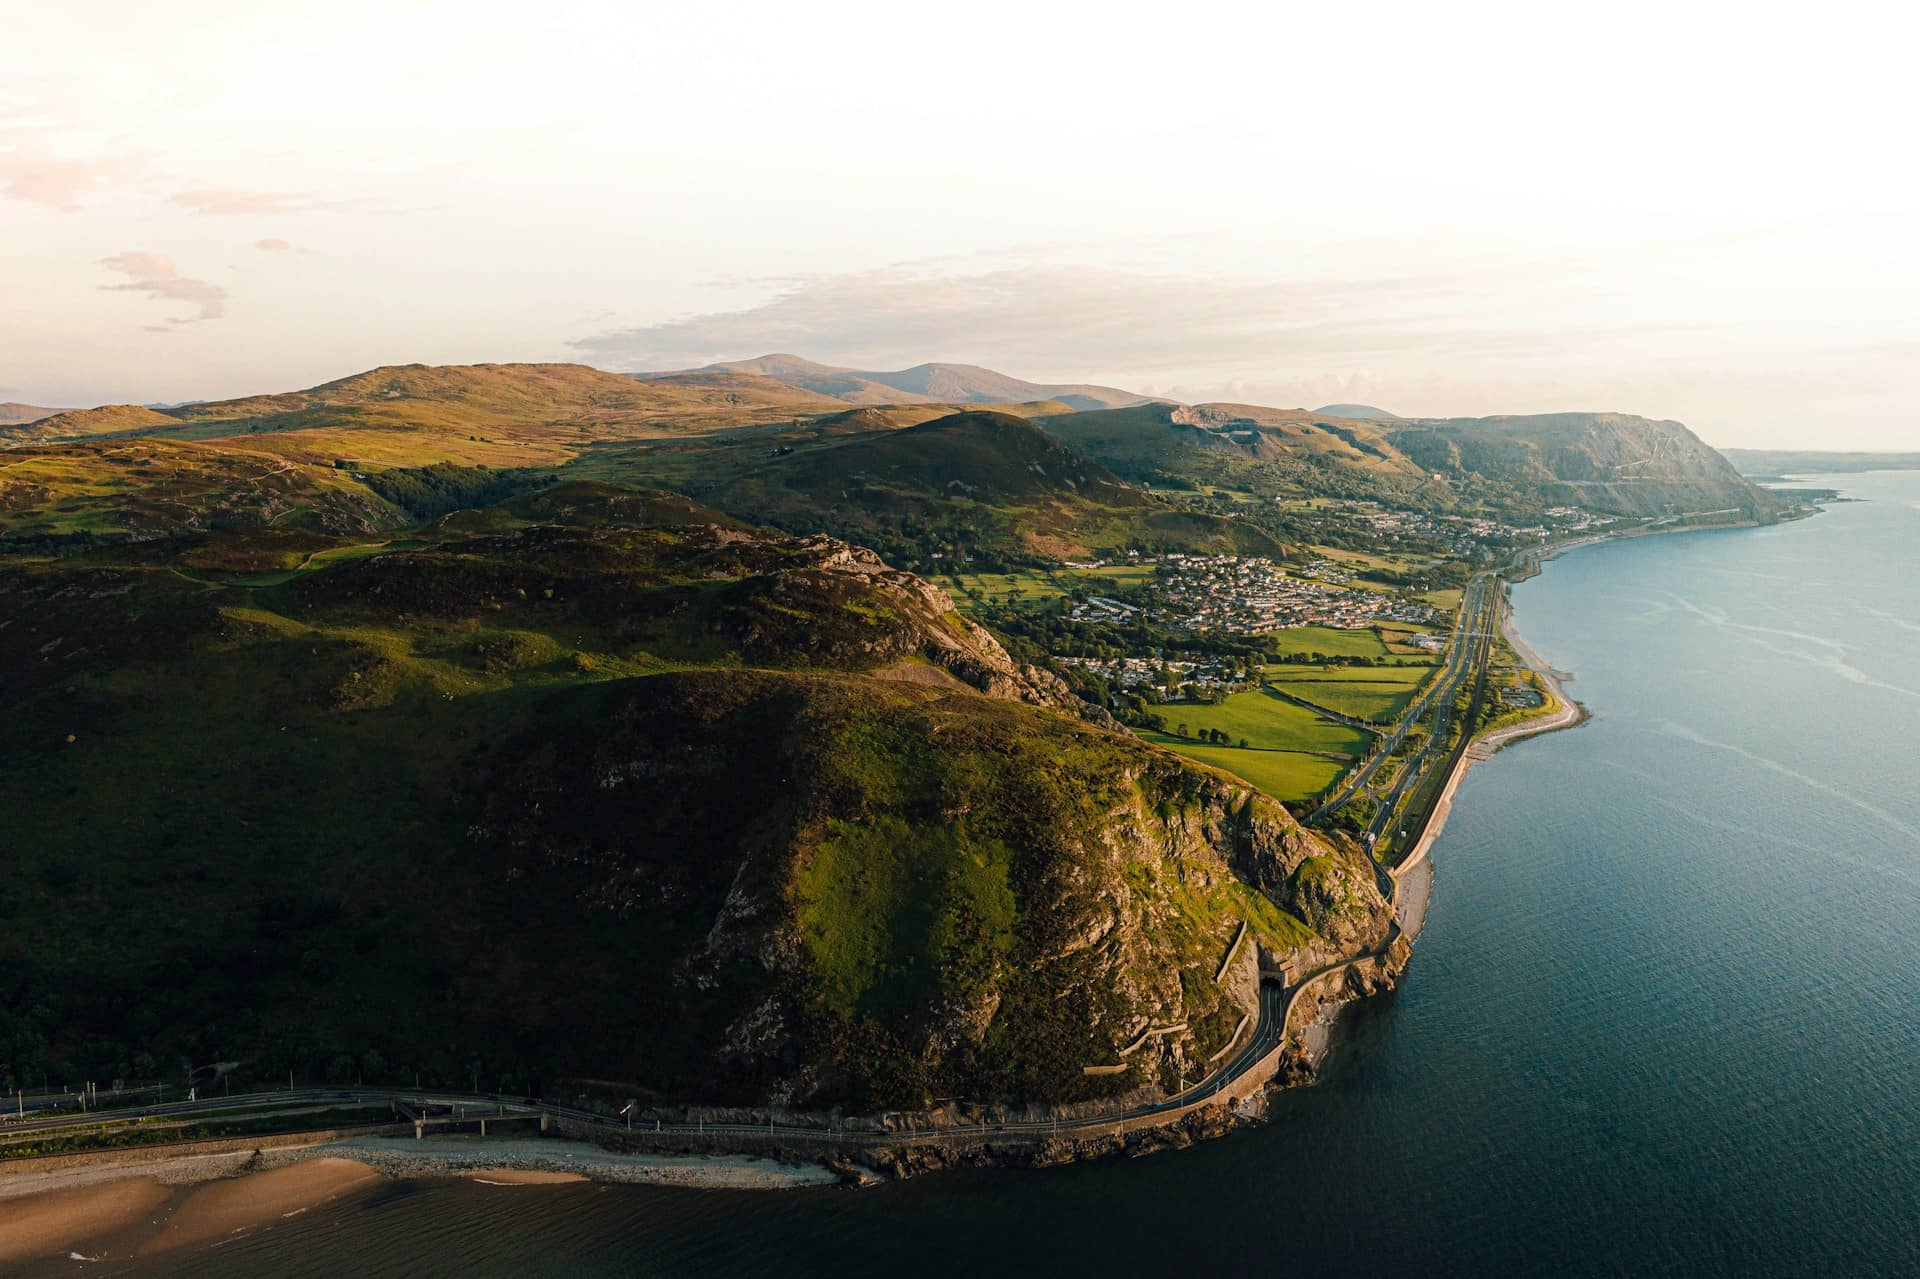 Coastal area of North Wales, UK